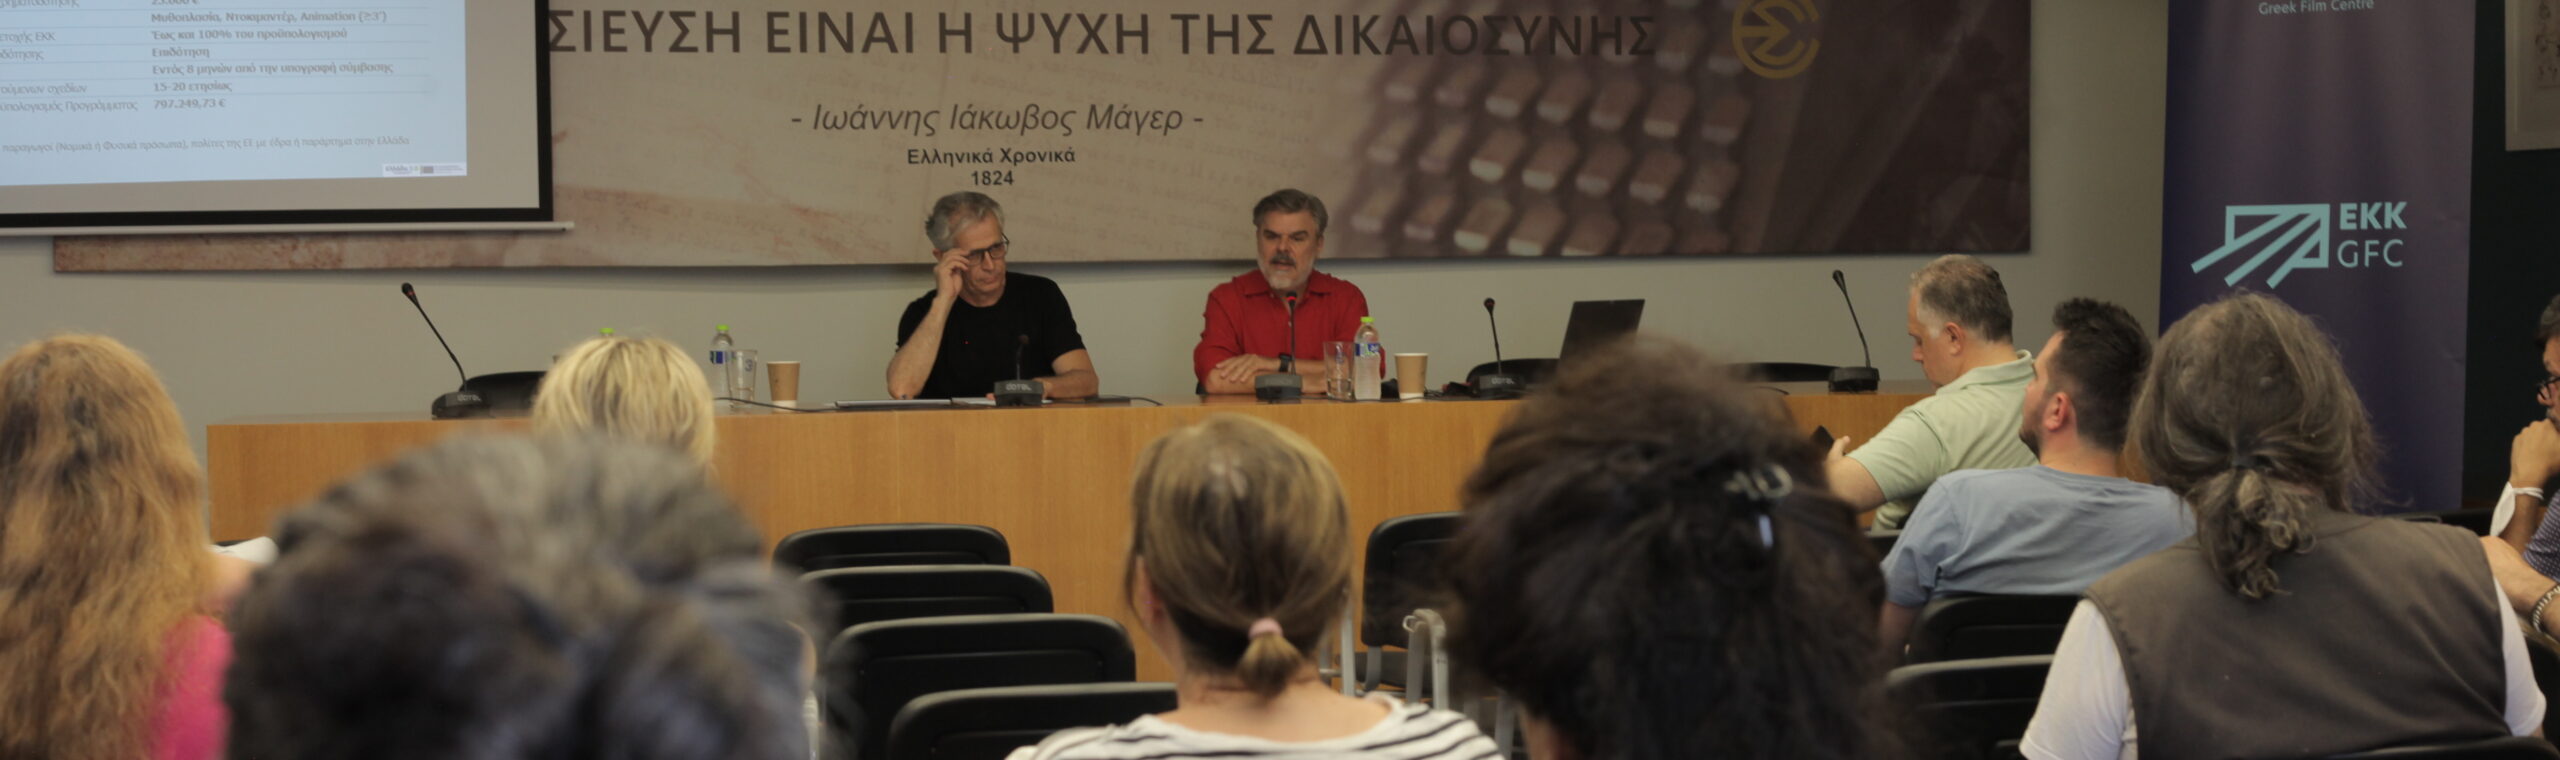 Featured image for “Πέντε νέα χρηματοδοτικά προγράμματα για την ενίσχυση της ελληνικής κινηματογραφίας”